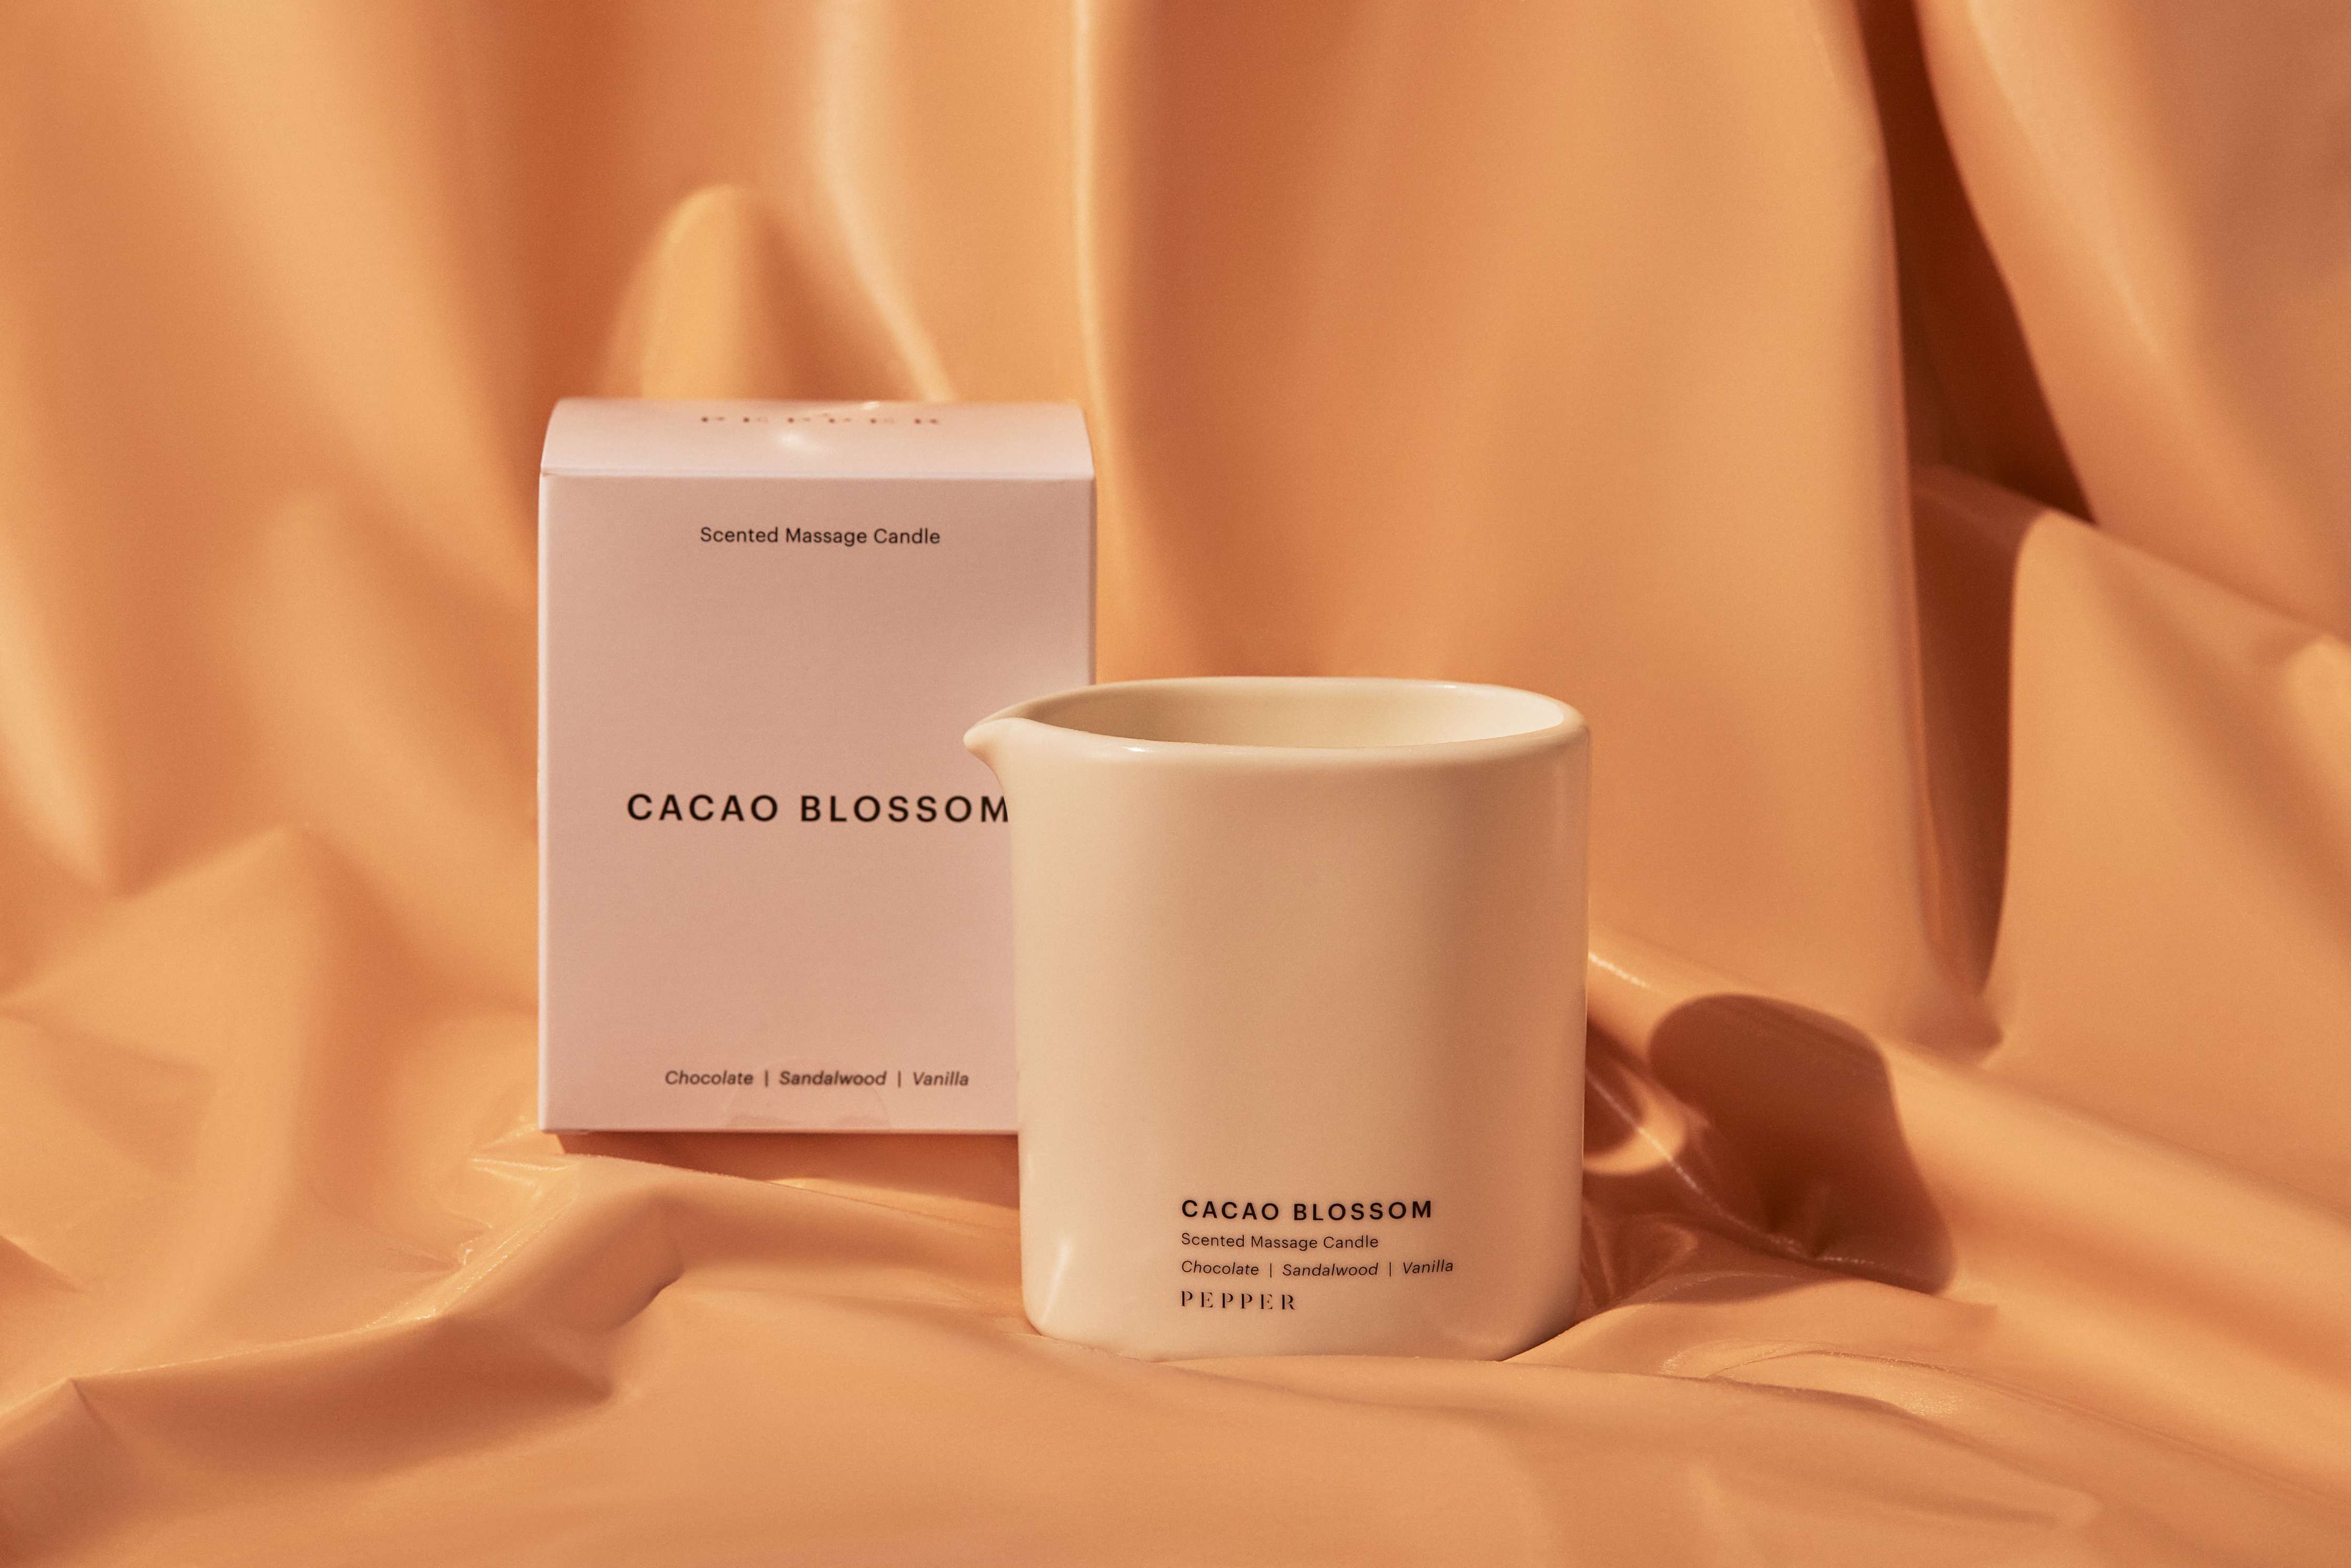 Cacao Blossom Massage Candle